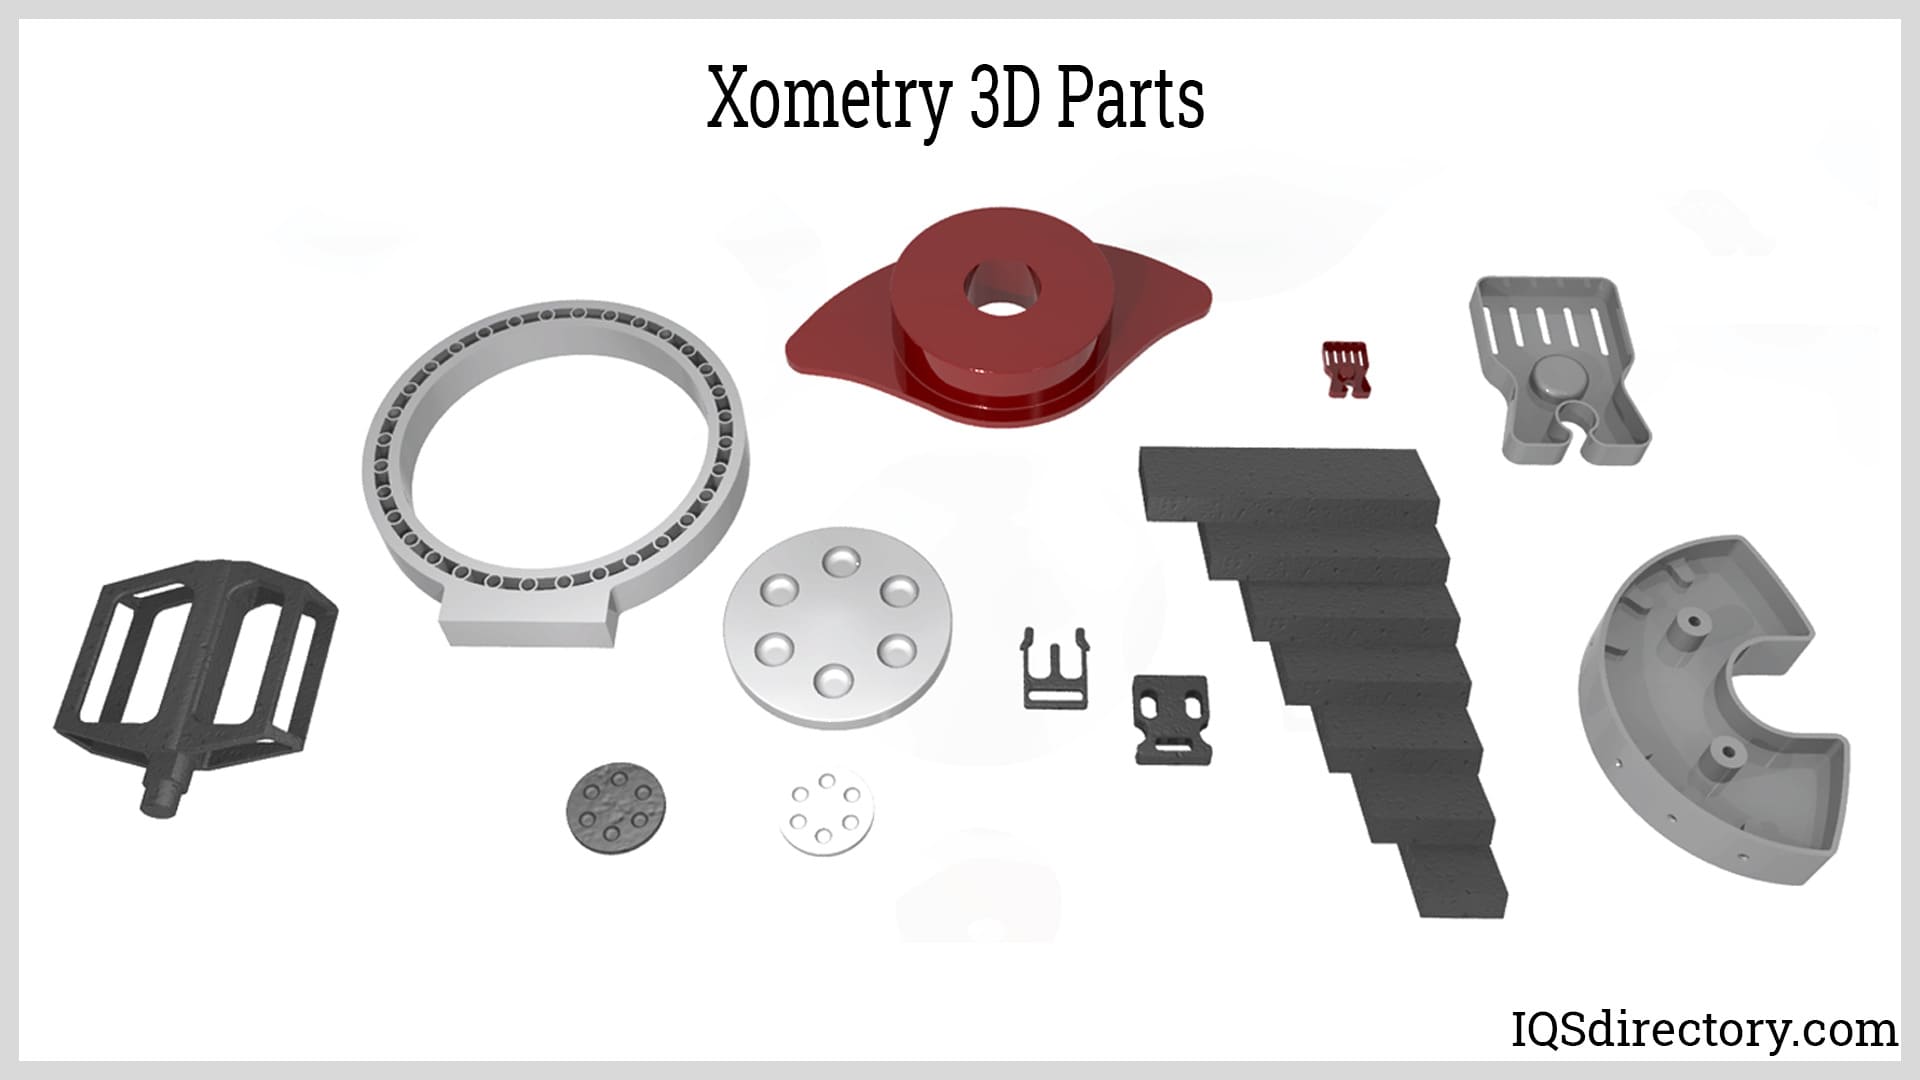 Xometry 3D Parts